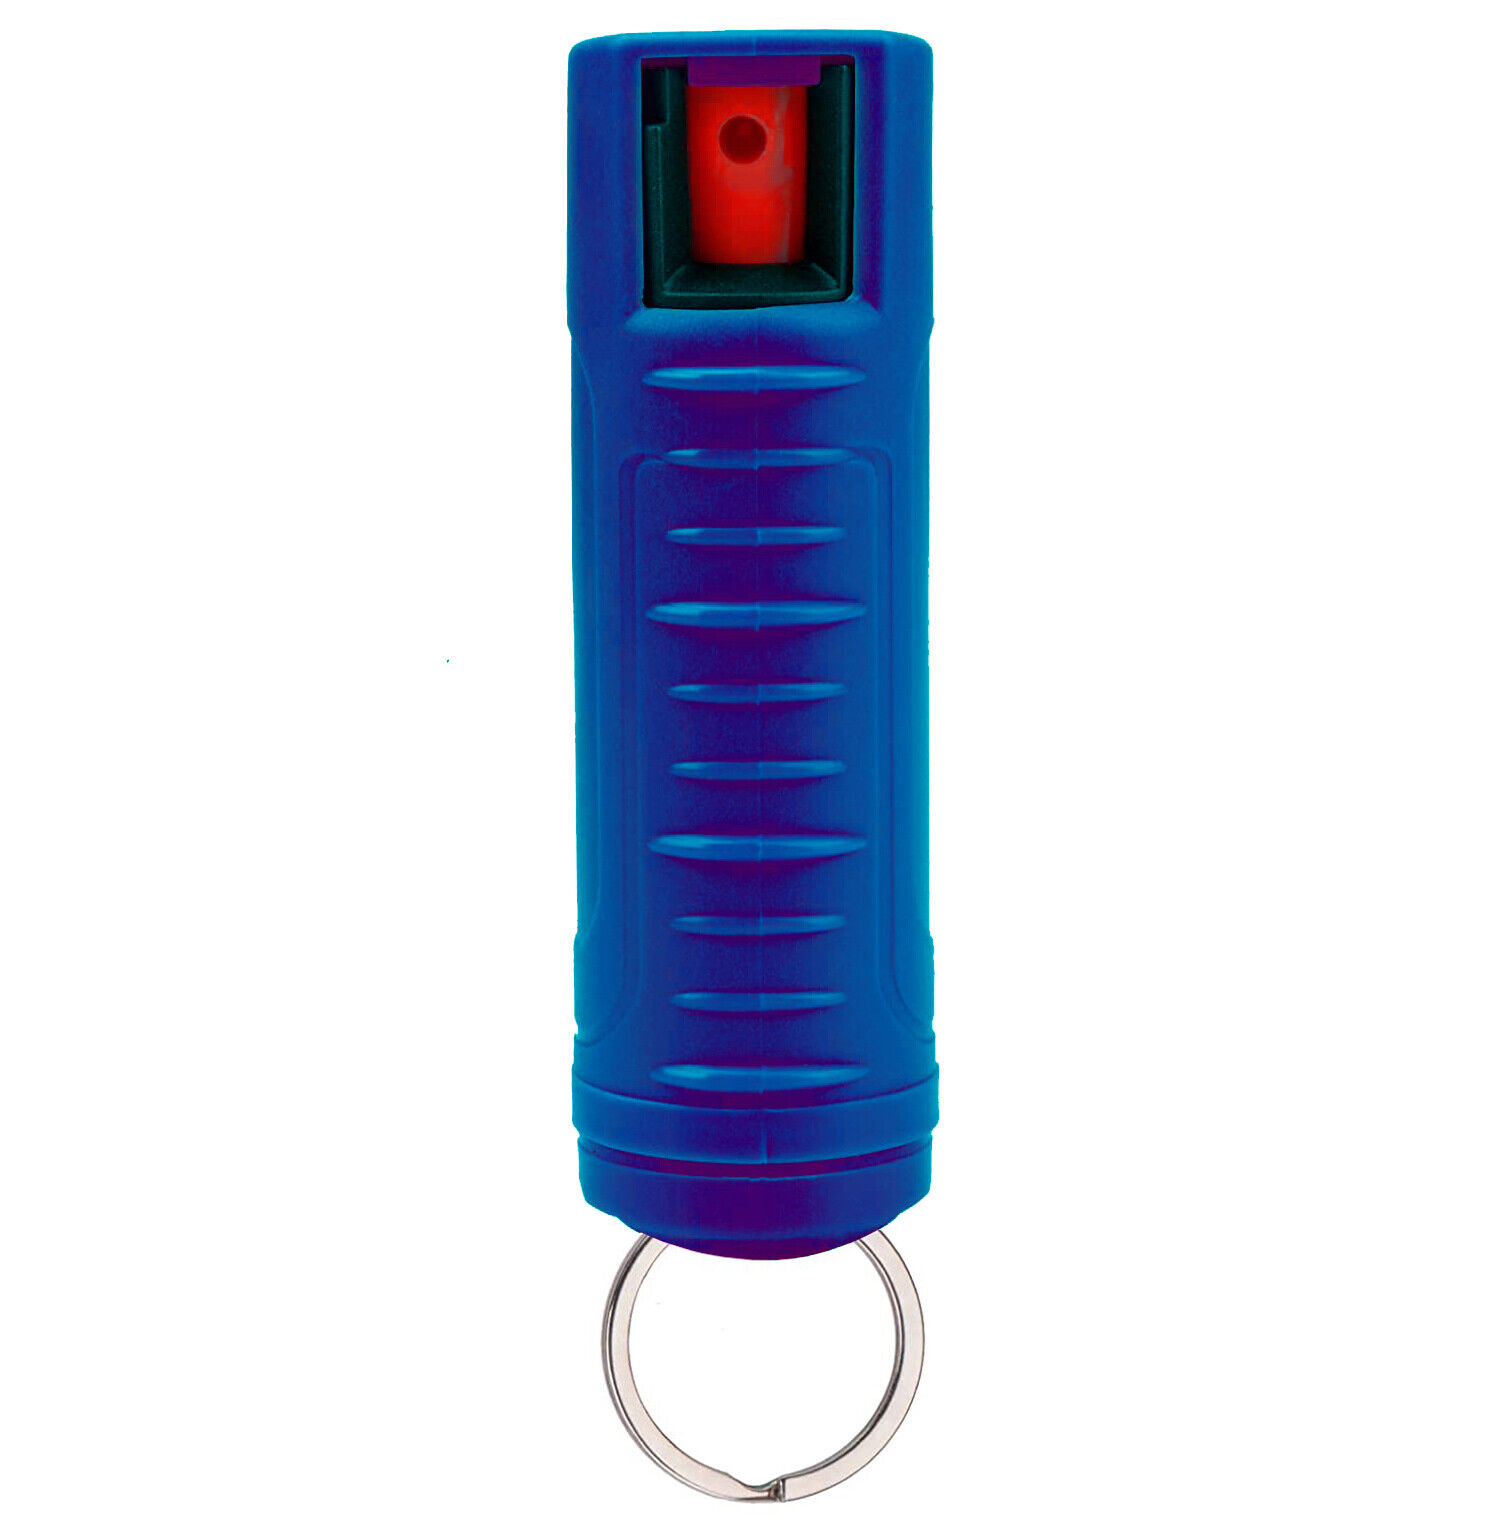 2-PACK BURN Pepper Spray Keychains - Blue